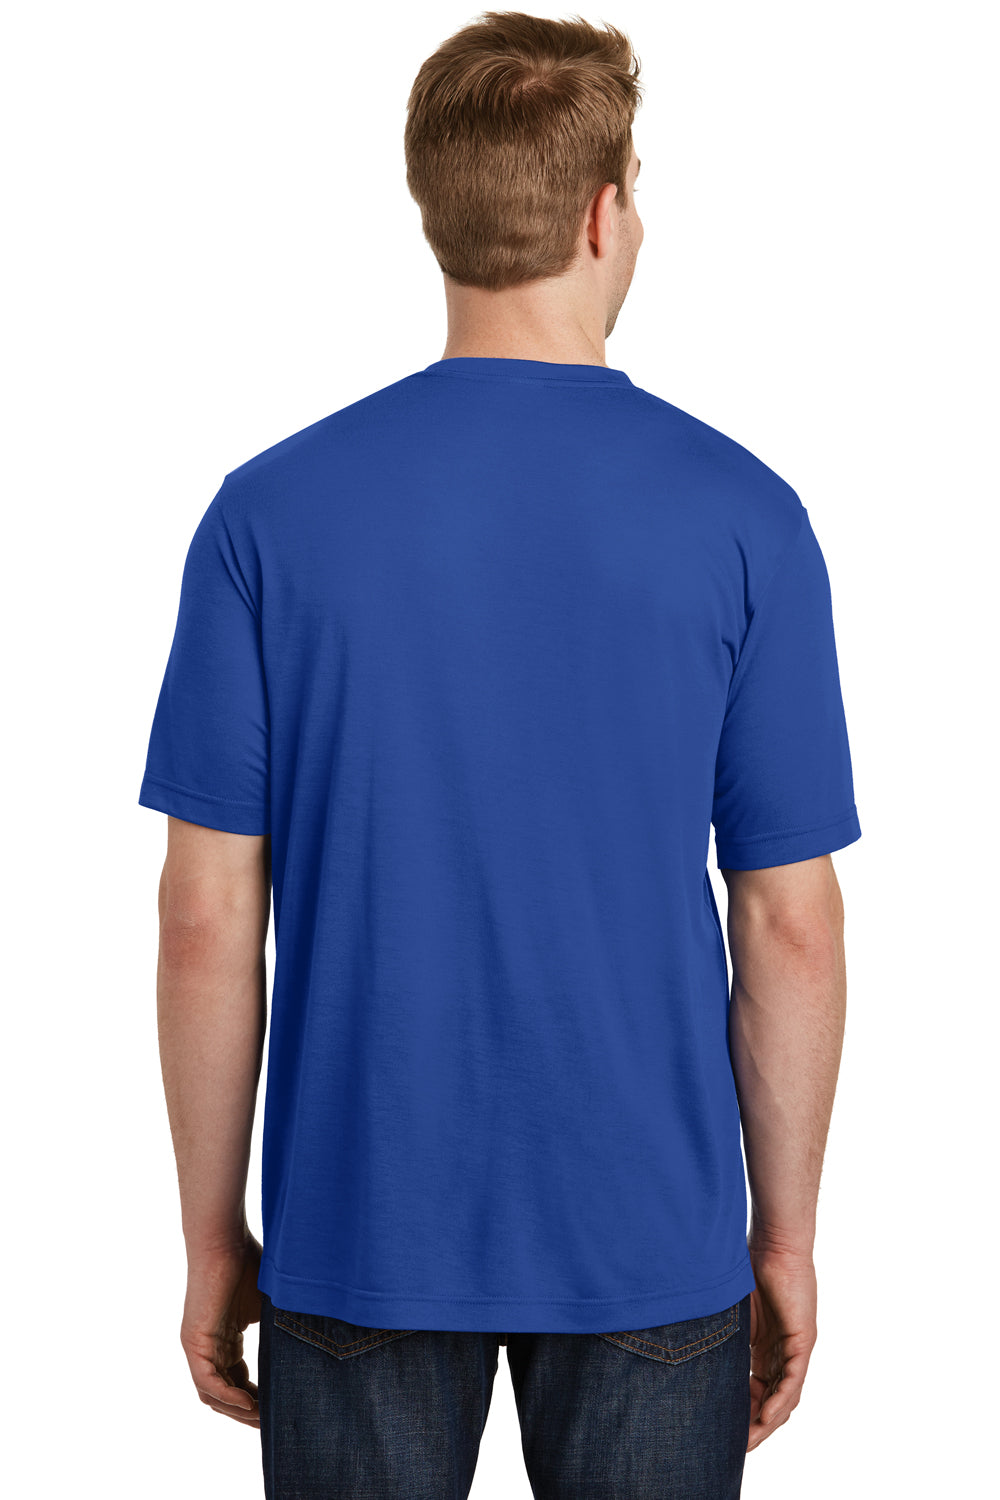 Sport-Tek ST450 Mens Competitor Moisture Wicking Short Sleeve Crewneck T-Shirt Royal Blue Back